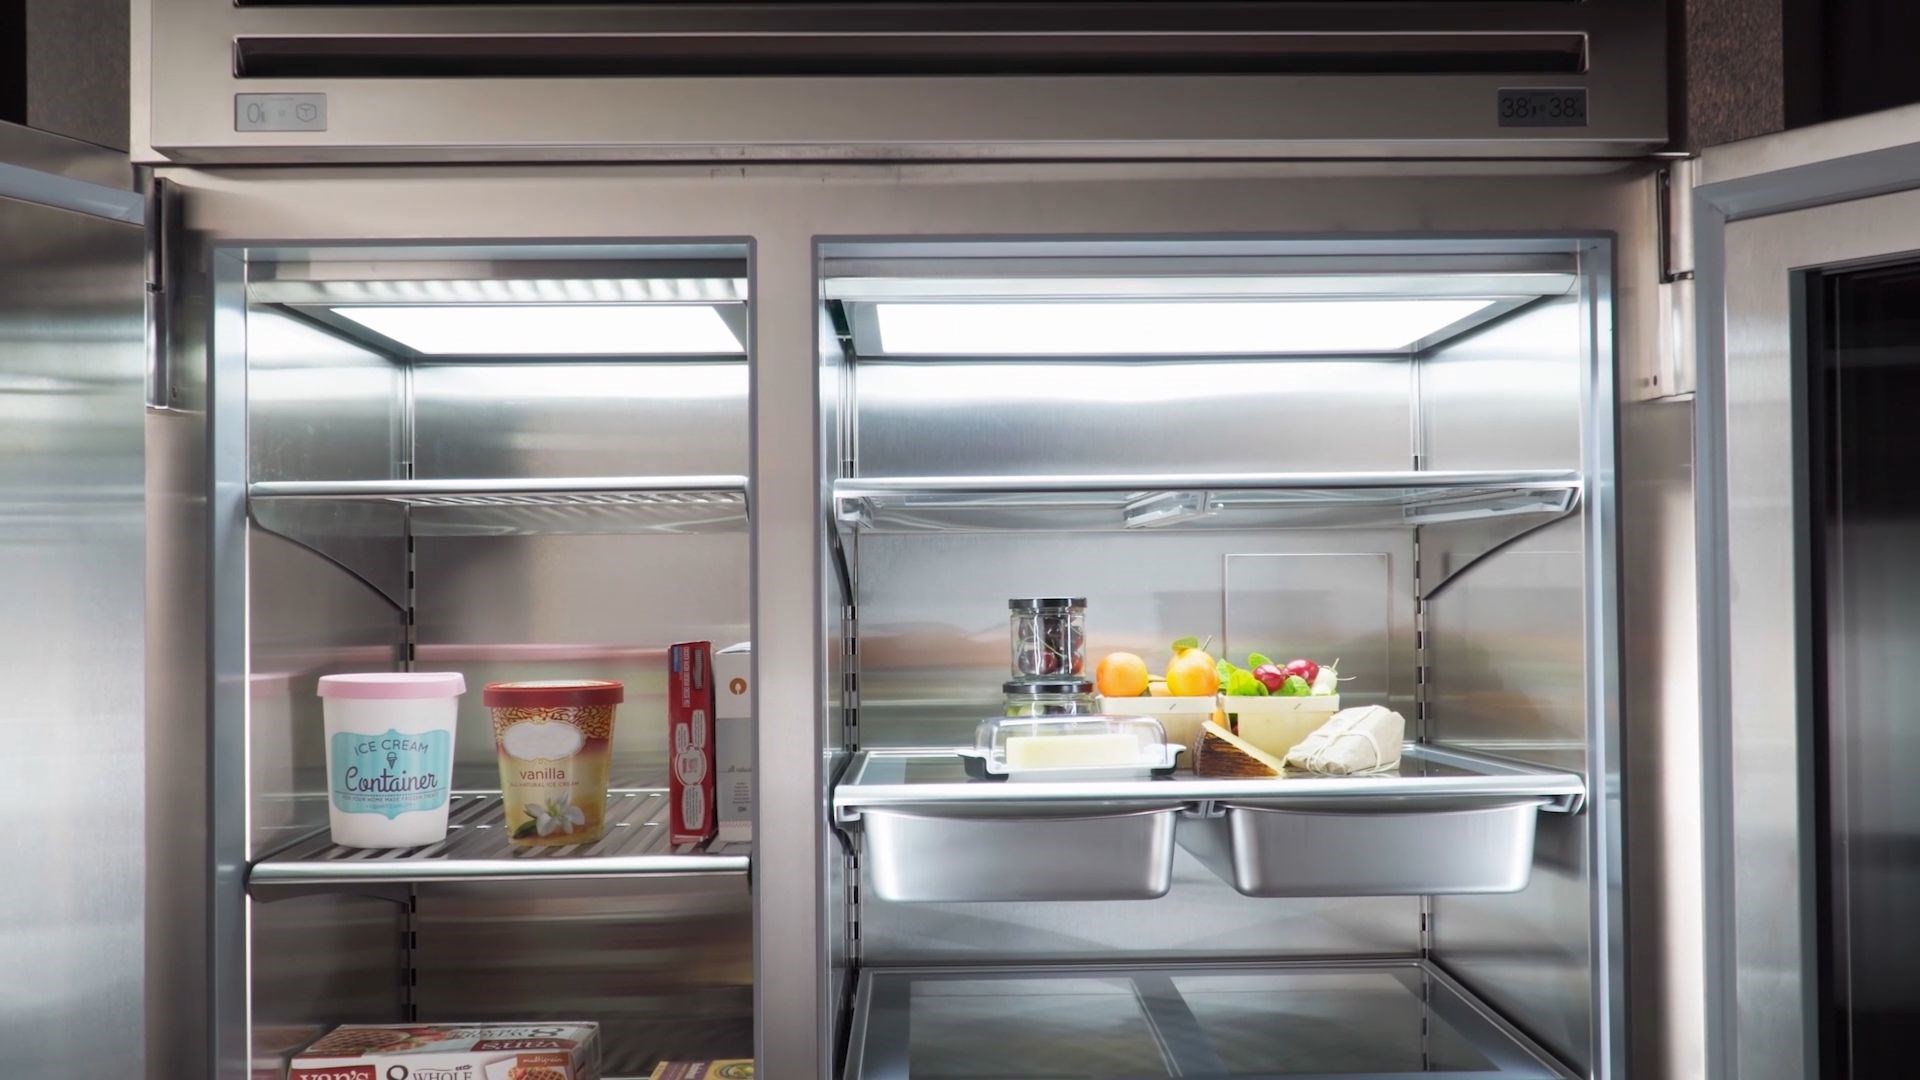 Sub-Zero Full Size Refrigerator Reviews 2019 - Dave Smith